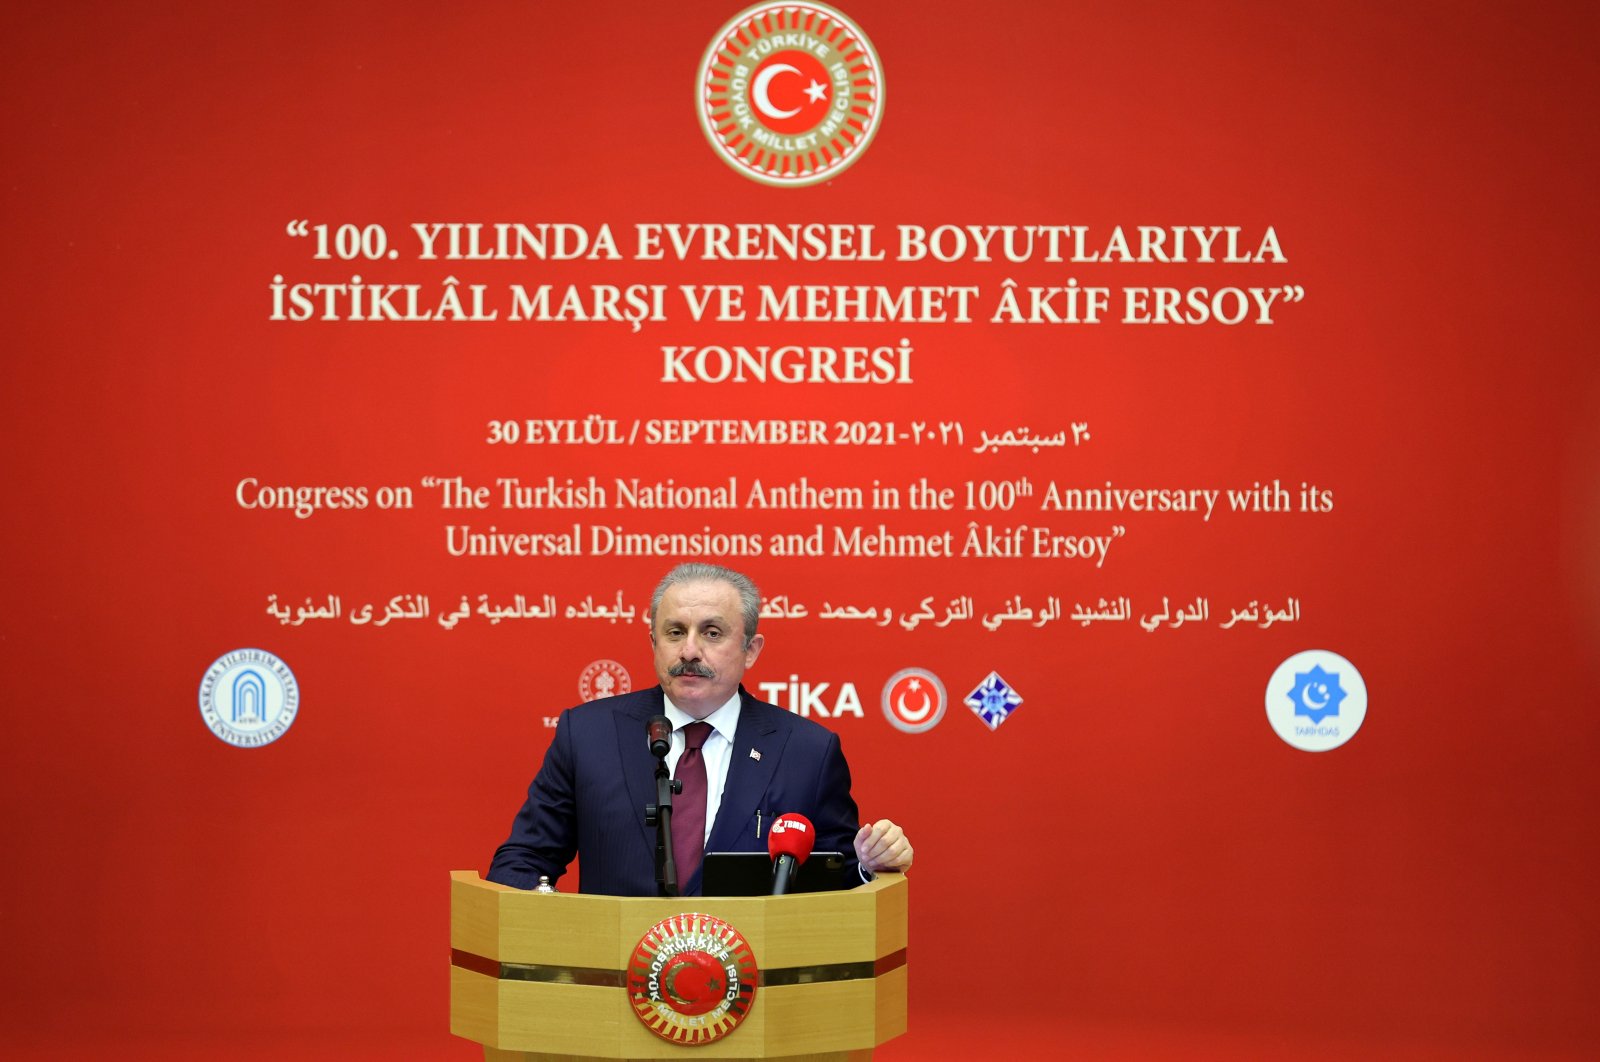 Parliament Speaker Mustafa Şentop speaks during an event in the capital Ankara, Turkey, Sept. 30, 2021. (AA Photo)